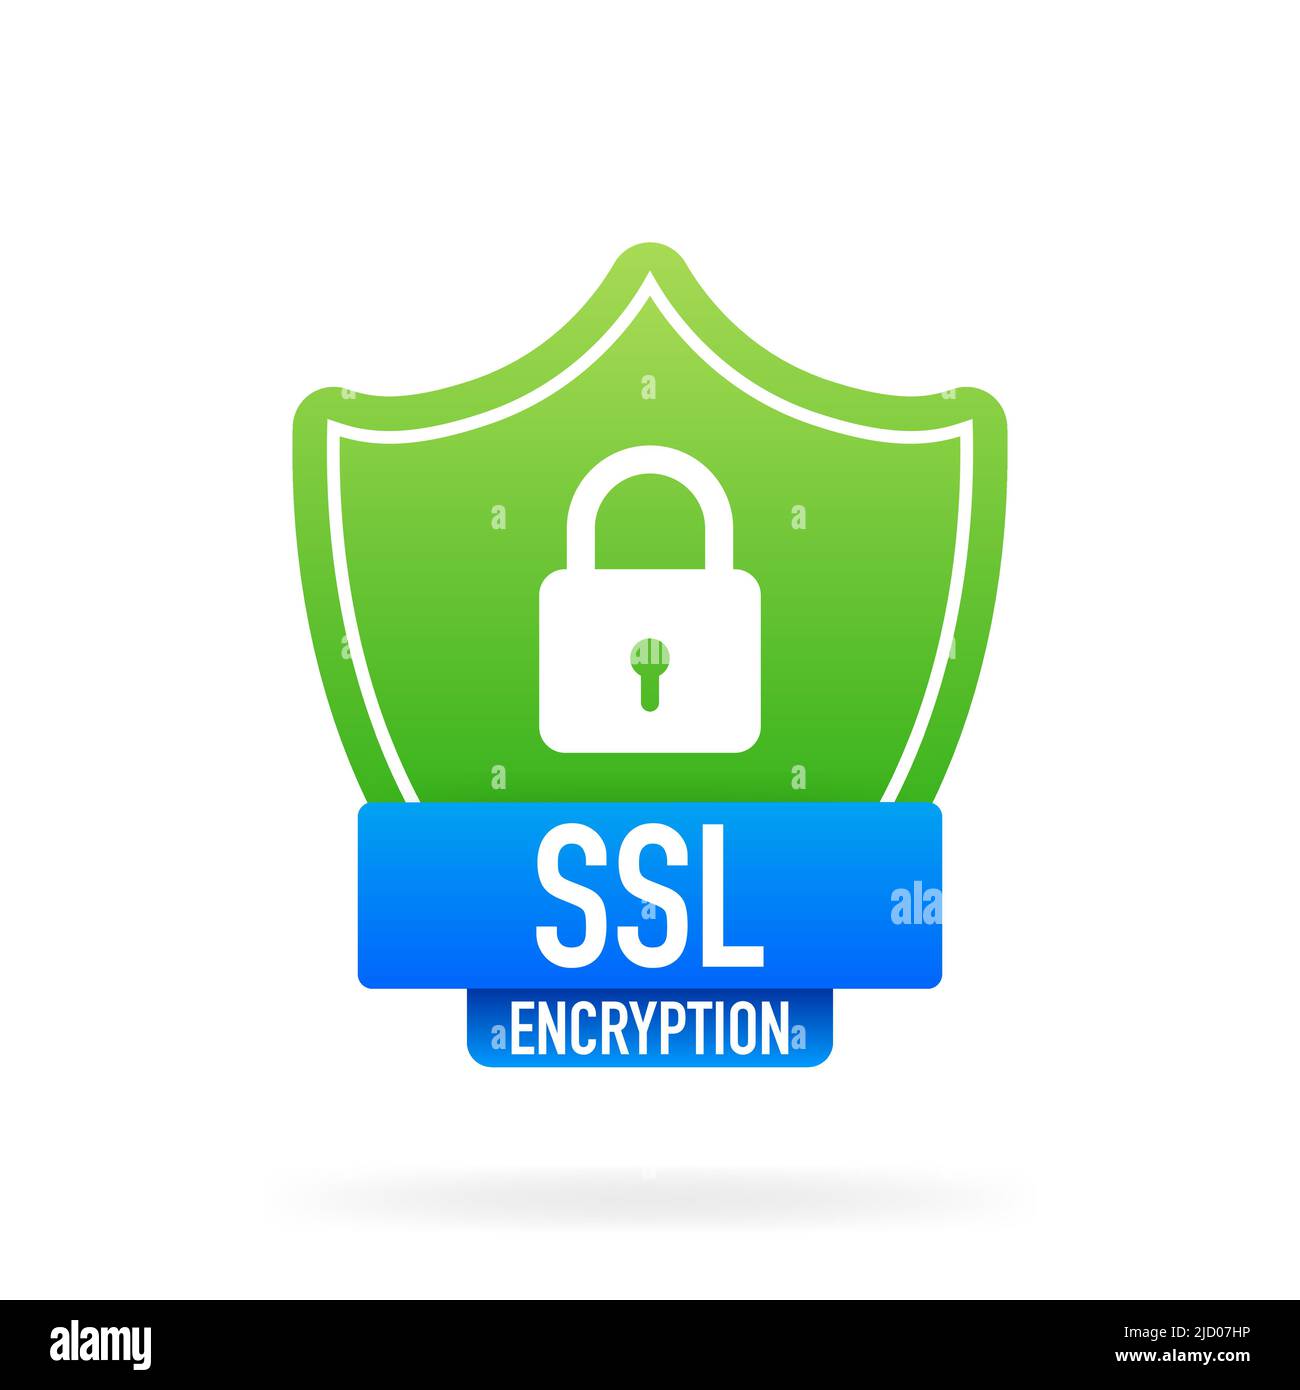 SSL encryption secure badge on white background. Green banner. Vector illustration. Stock Vector